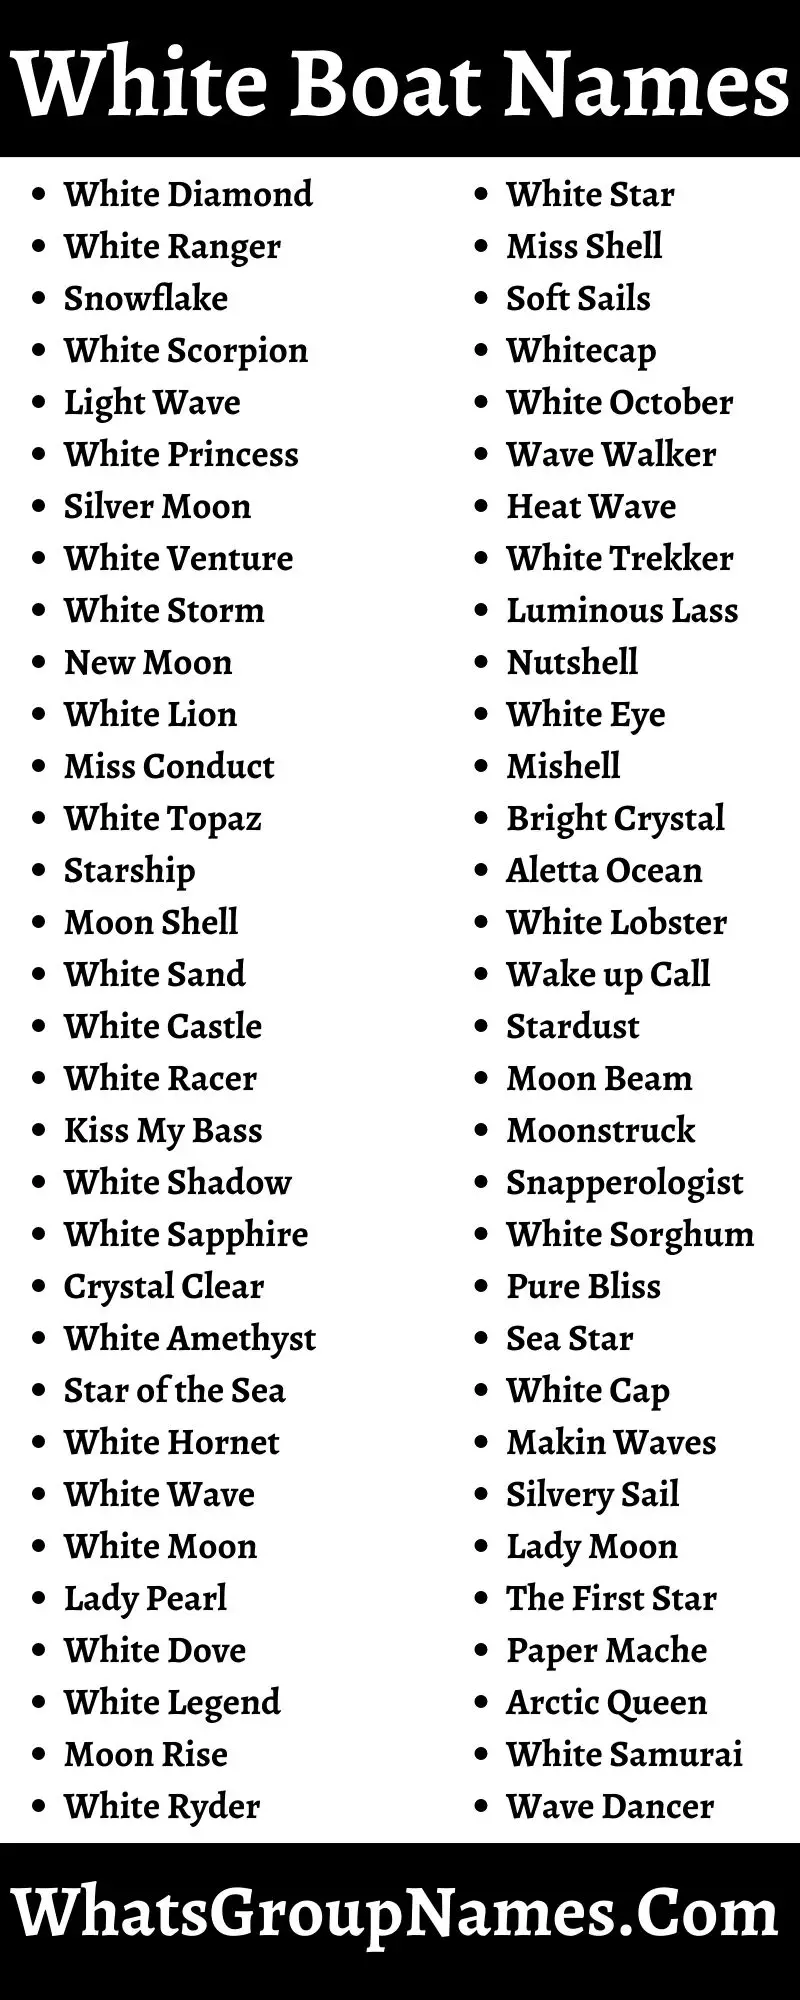 White Boat Names